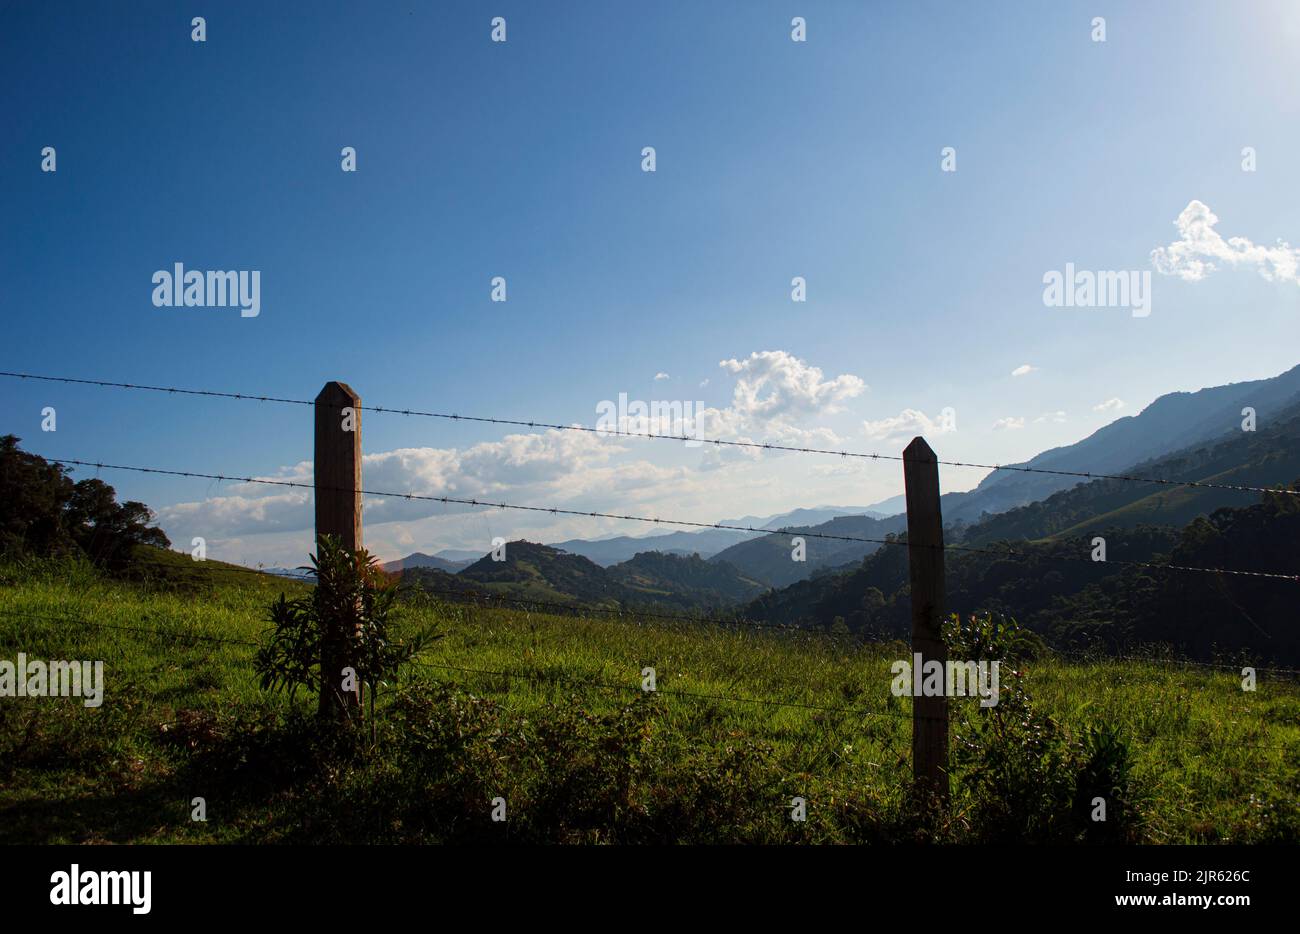 Rural Fence With Mountains. Serra da Mantiqueira, Minas Gerais, Brazil. Stock Photo